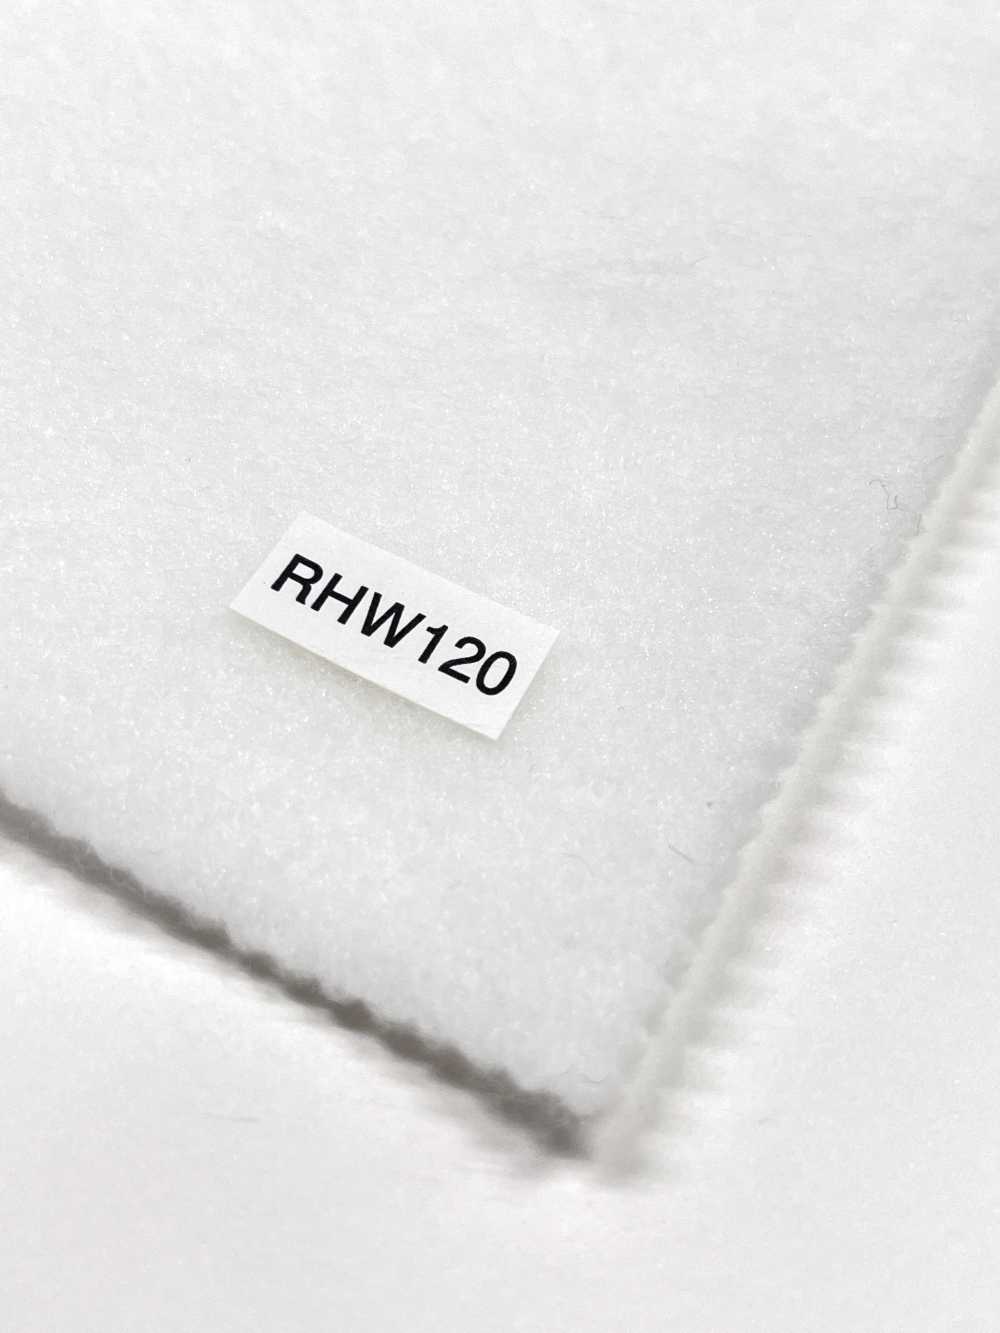 RHW120 Conbel NOWVEN(R) Série Domit Entretela Fusível Tipo Macio[Entrelinha] Conbel